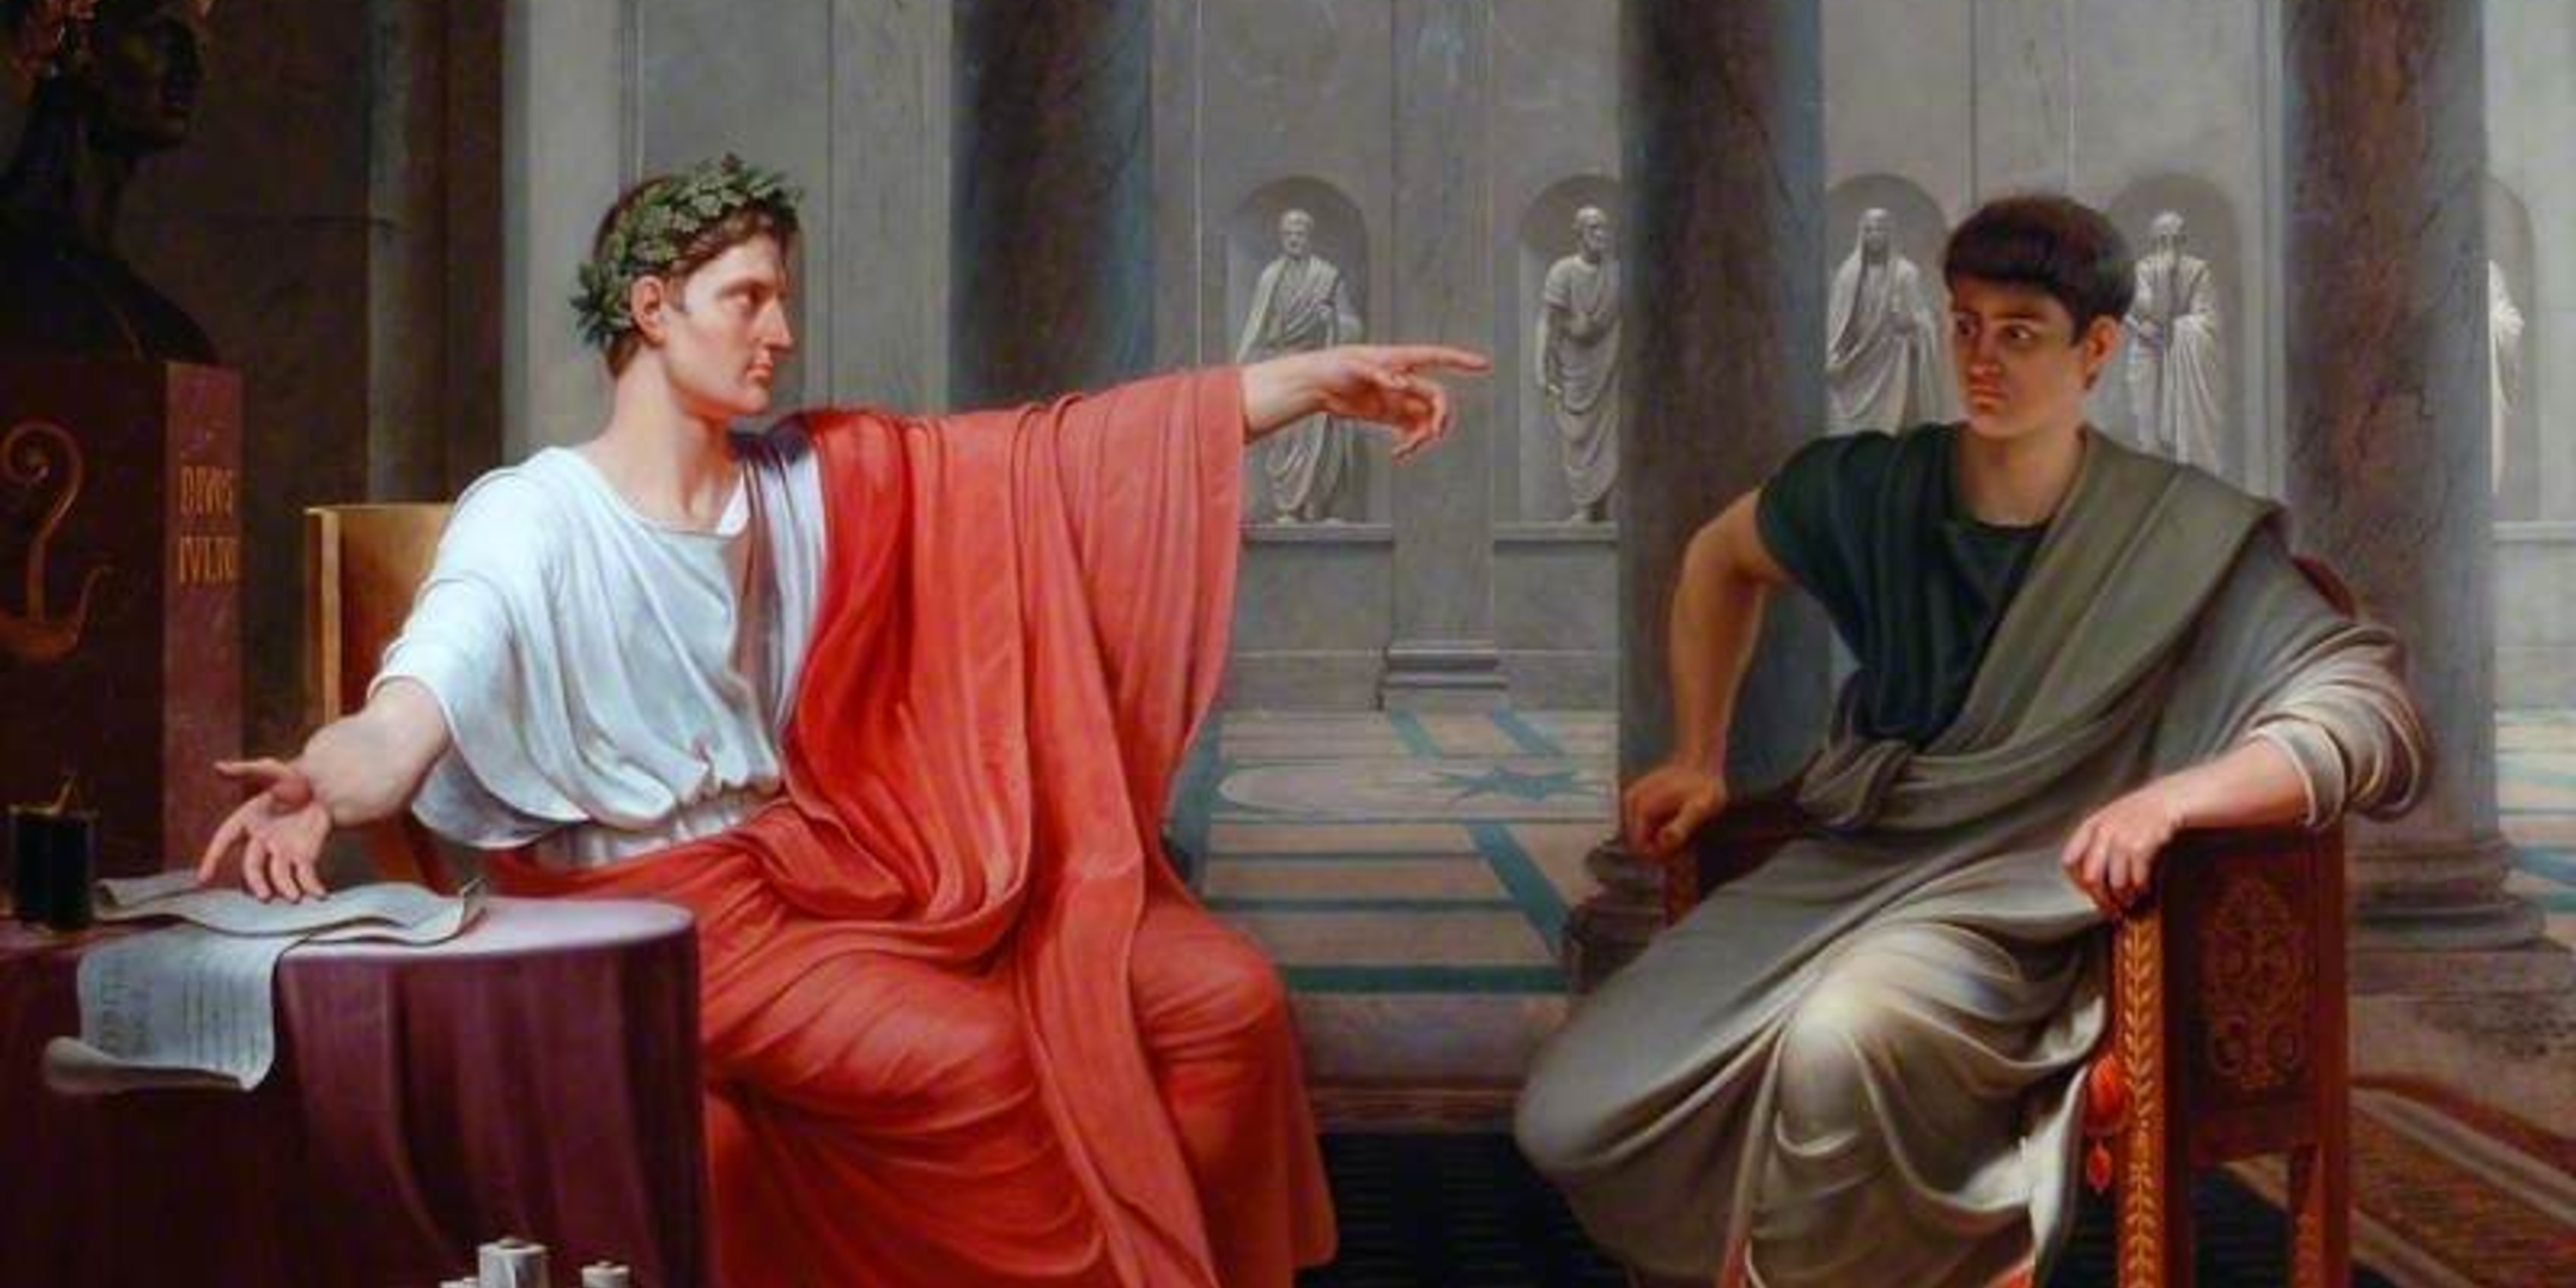 The Emperor Augustus Rebuking Cornelius Cinna for his treachery